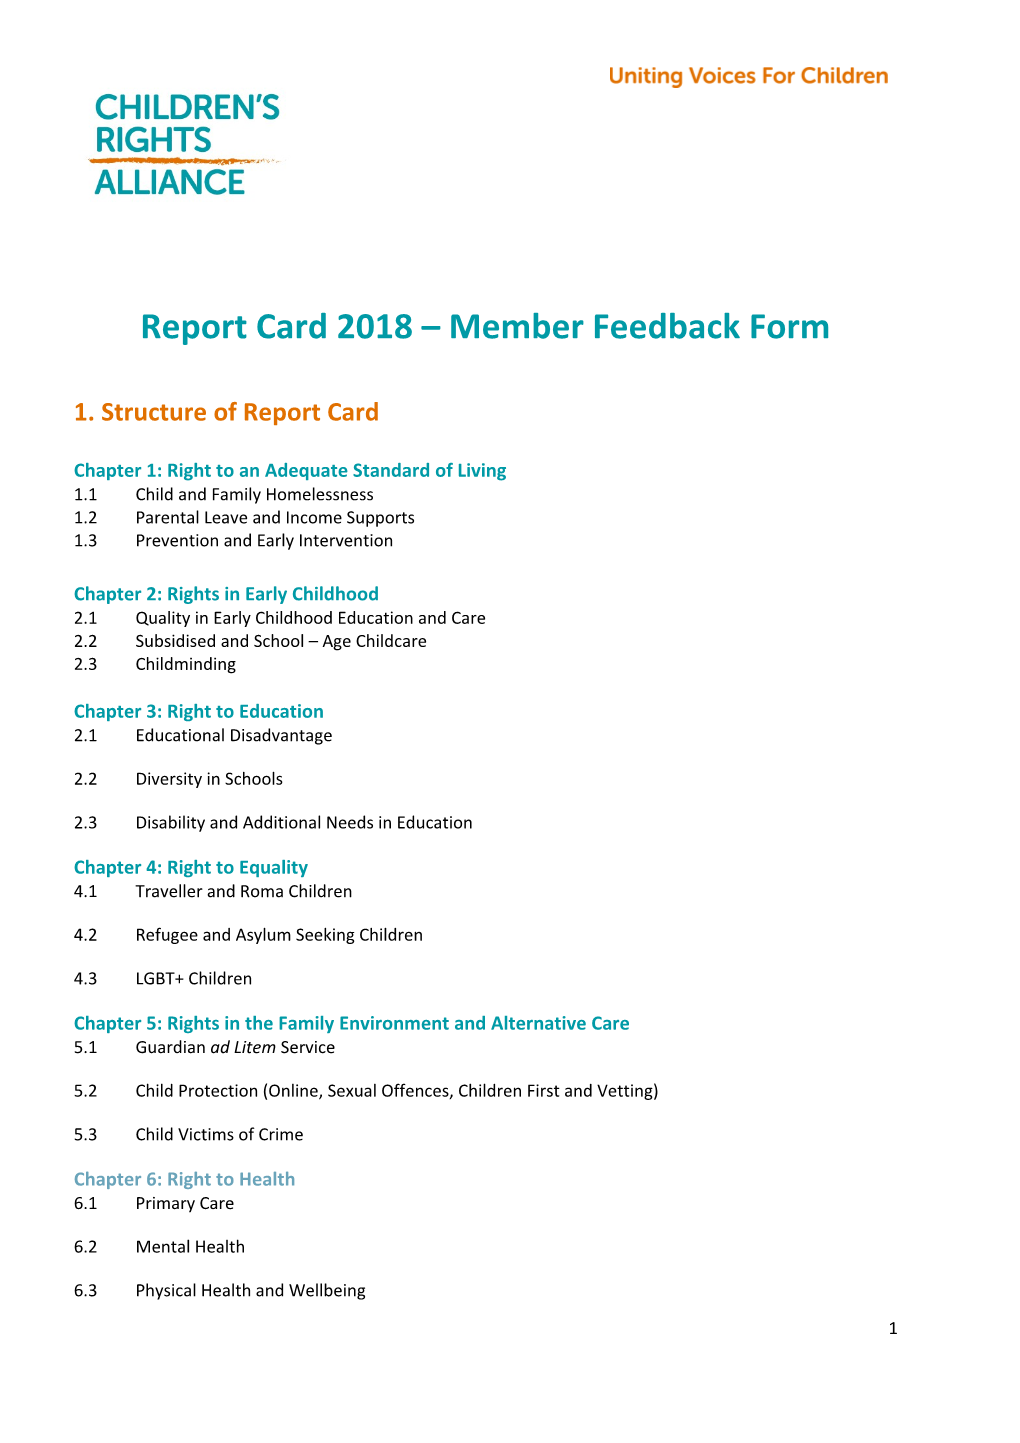 Report Card 2018 Member Feedback Form